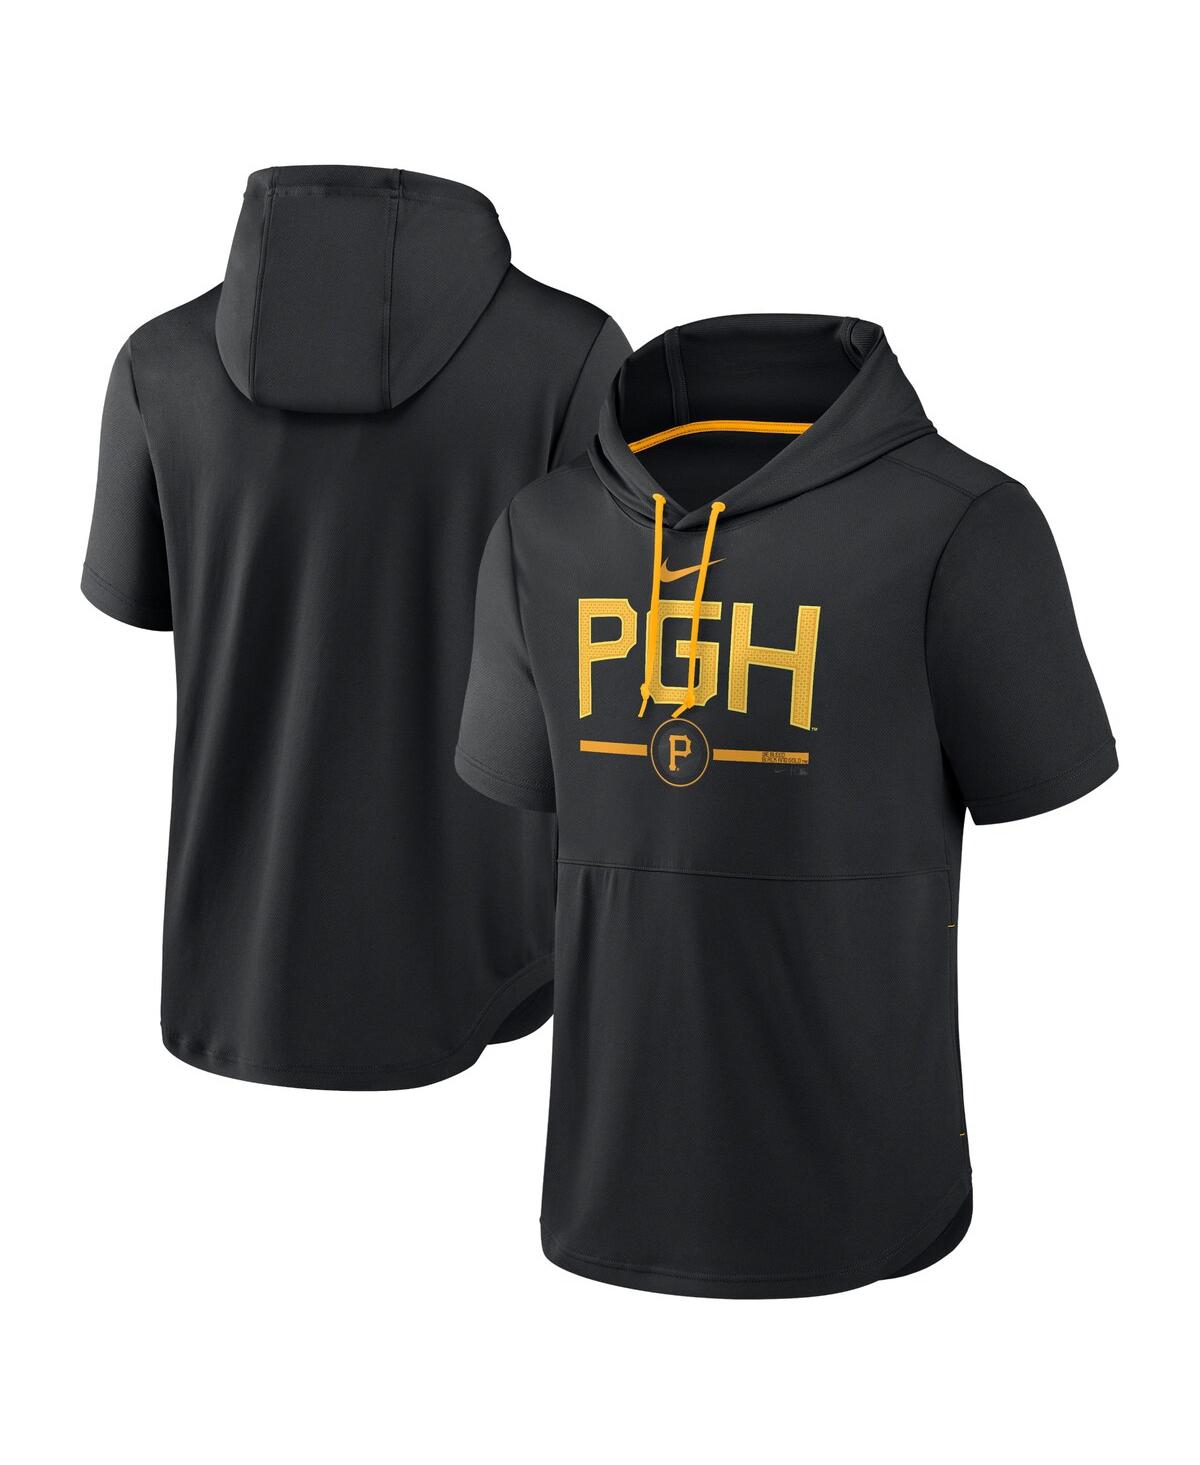 Men's Nike Black/Gold Pittsburgh Pirates Authentic Collection Pregame Performance Raglan Pullover Sweatshirt Size: Small